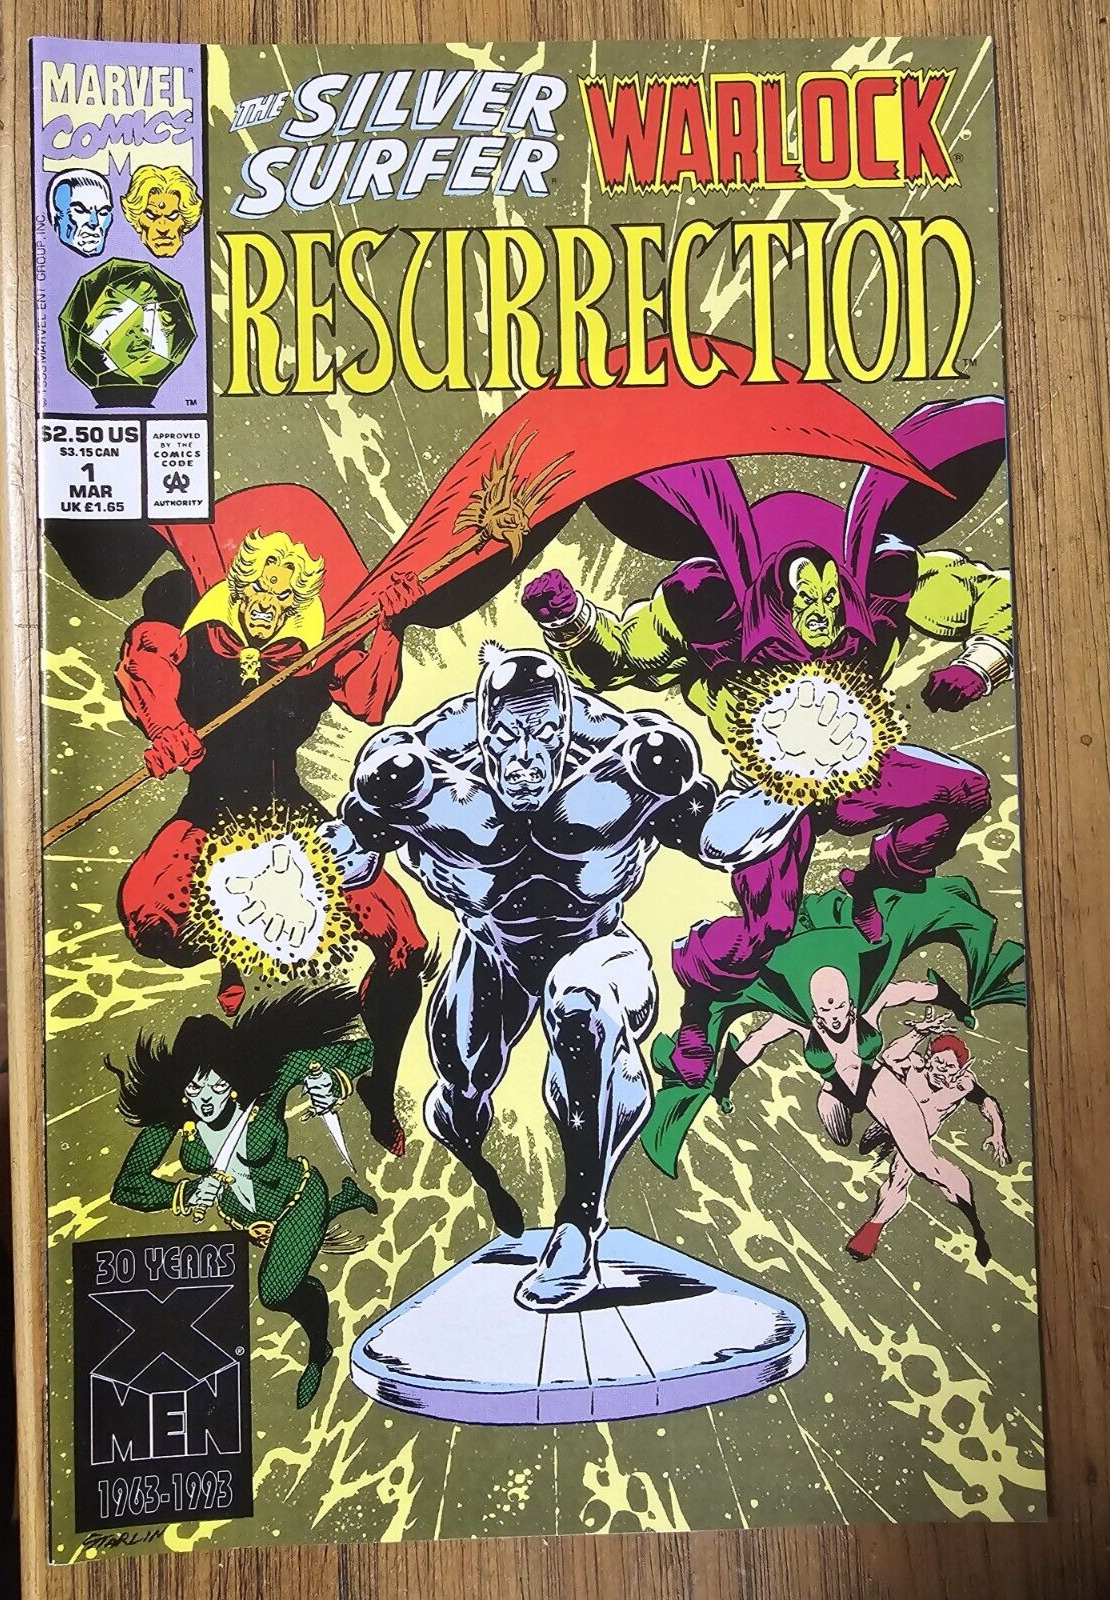 The Silver Surfer Warlock RESURRECTION #1 March 1993 Comics Comic Book VG+